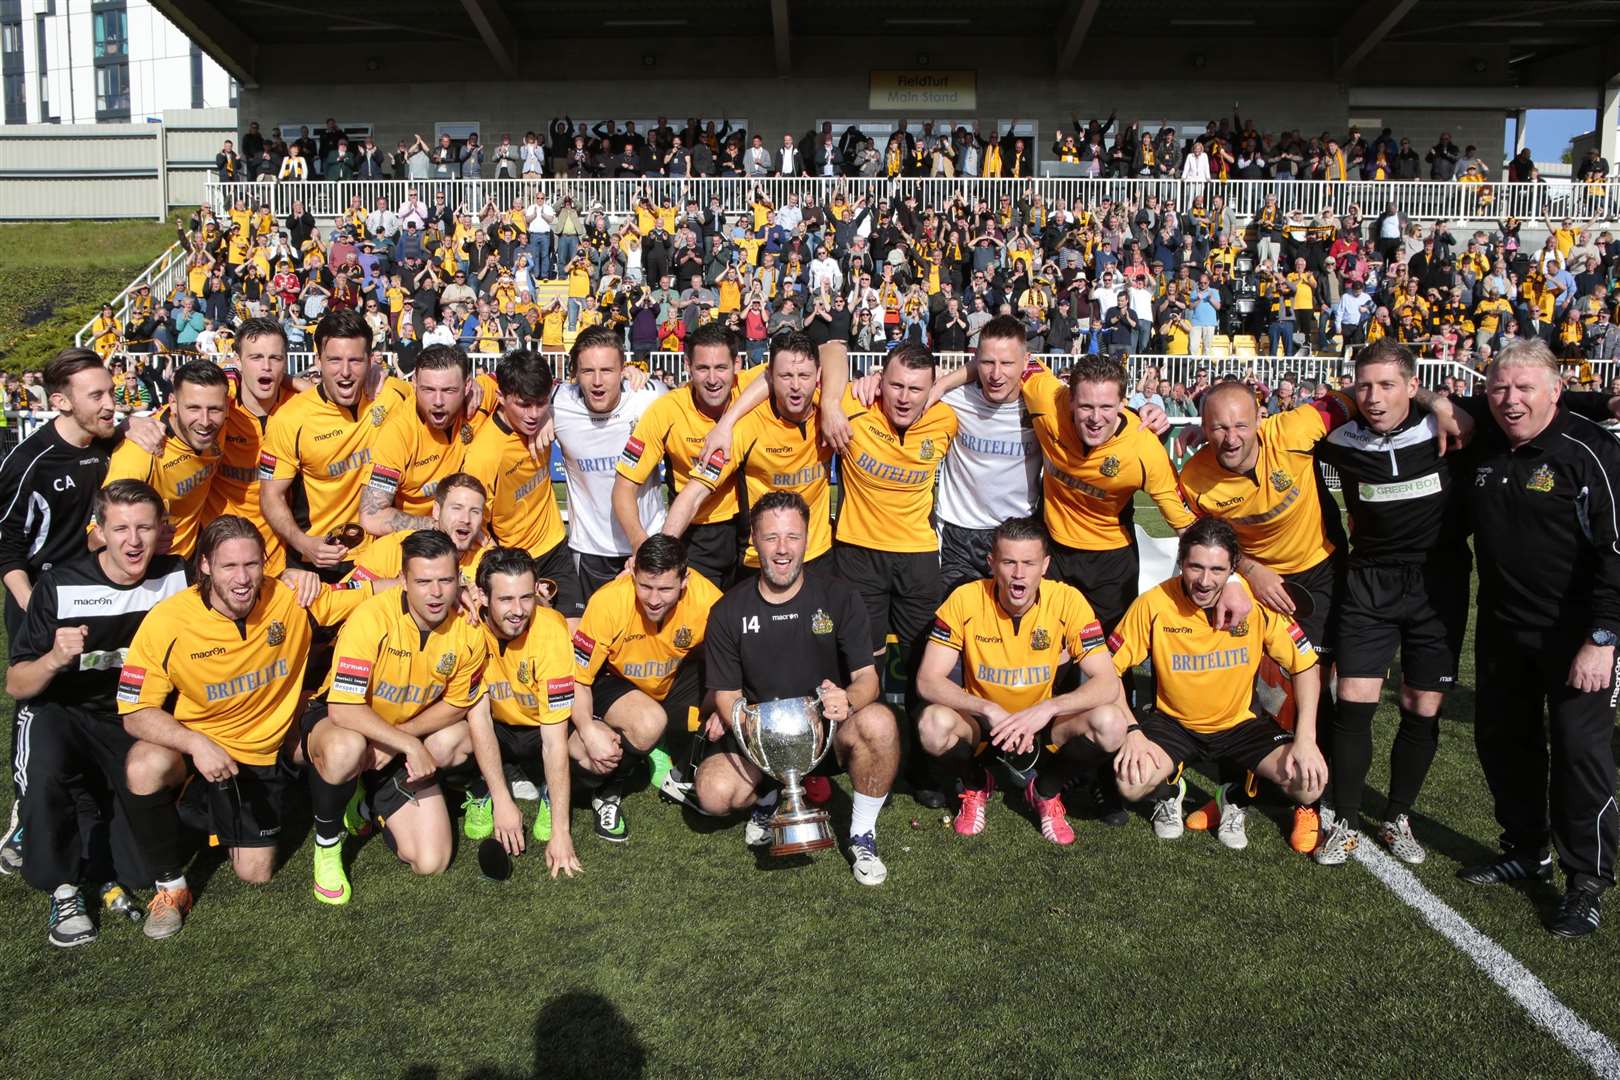 Maidstone United 2014/15 title winners